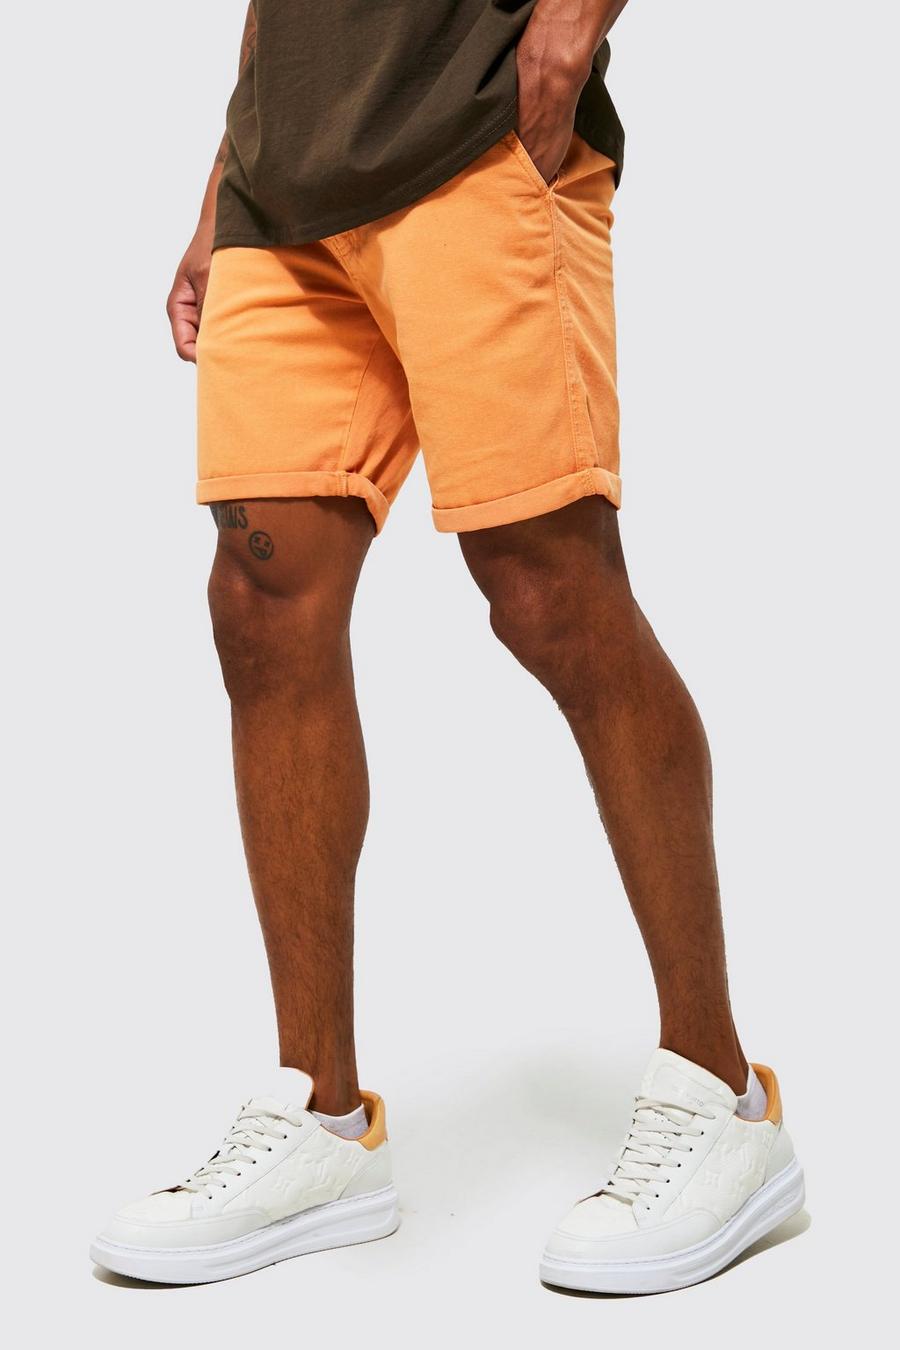 Pantalón corto vaquero sobreteñido ajustado elástico, Orange naranja